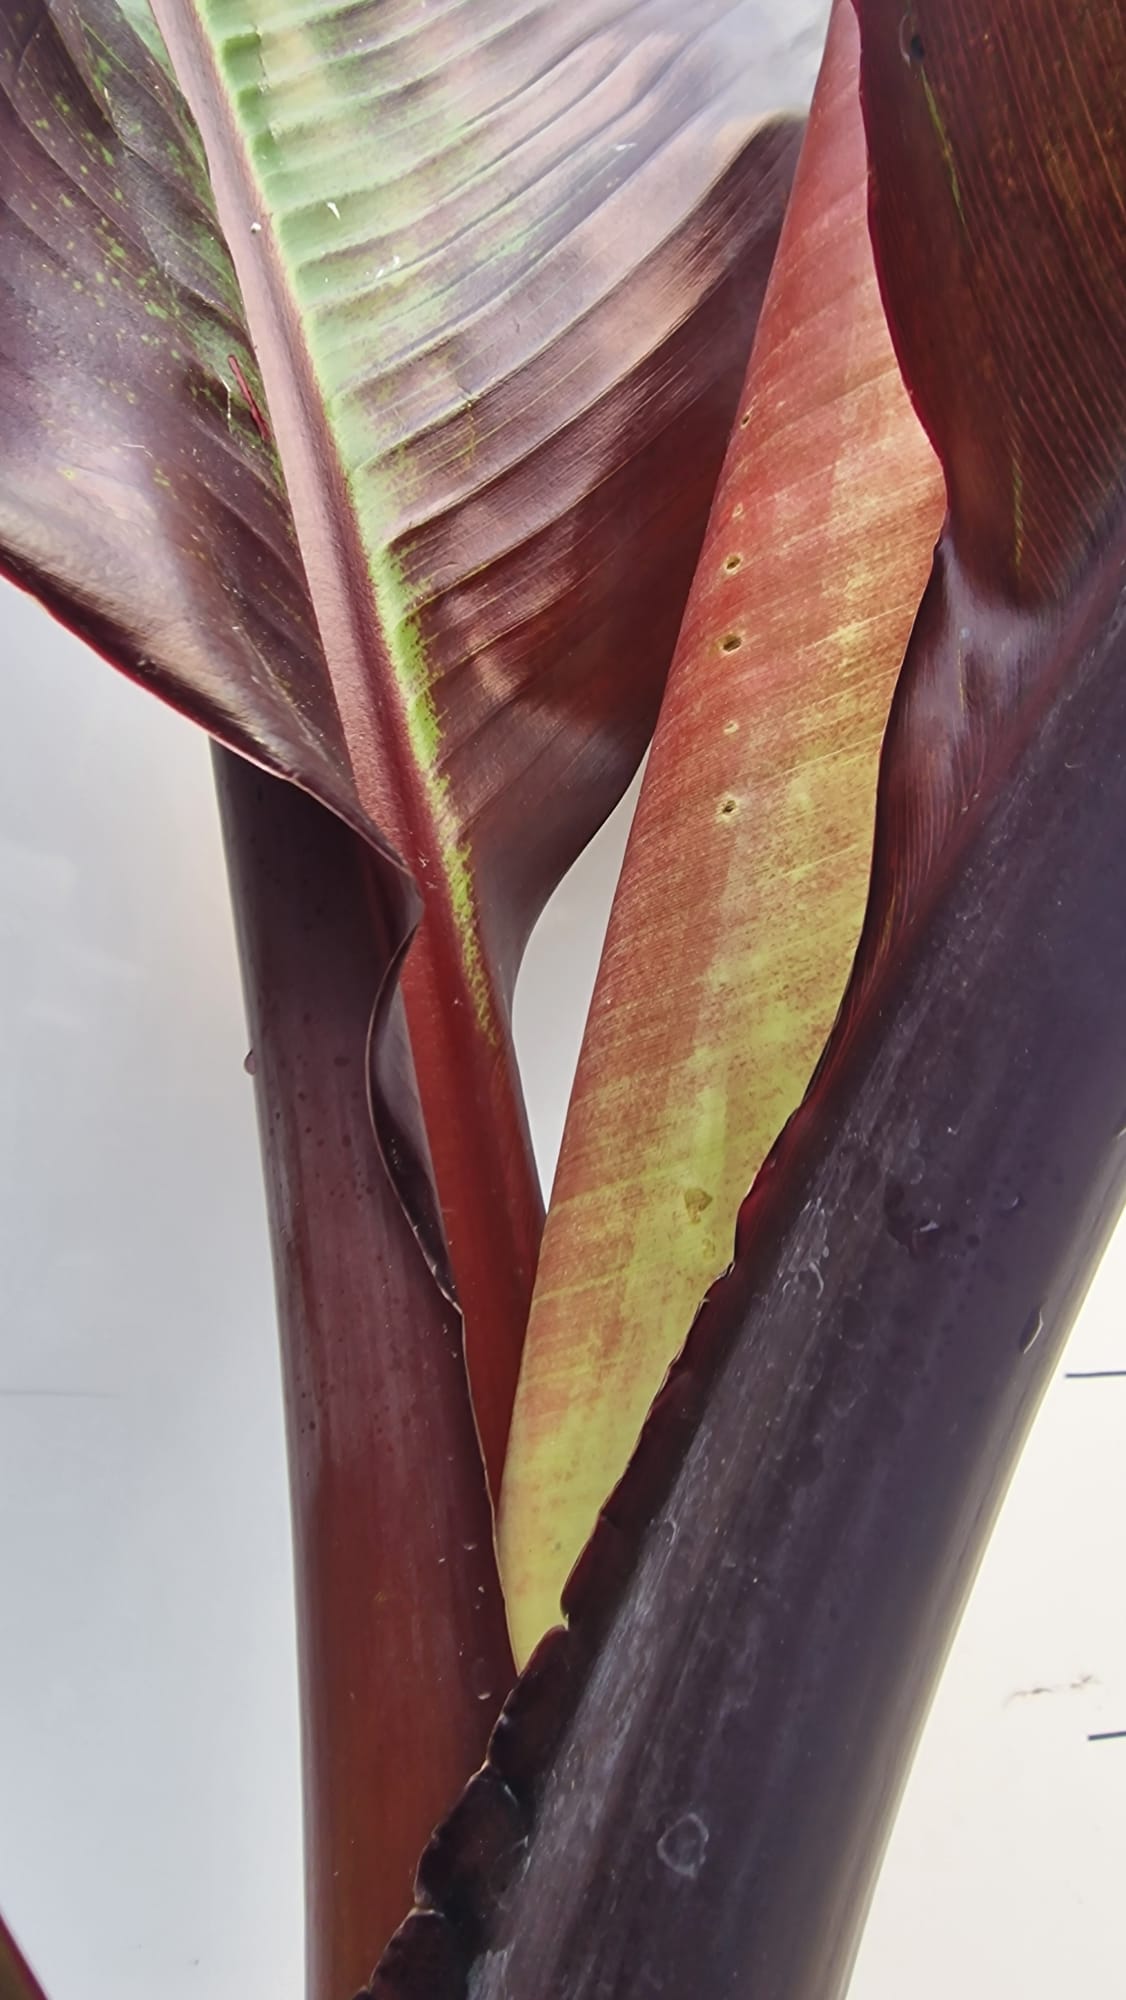 Bananier à feuilles rouges (Musa Ensete Maurelli)